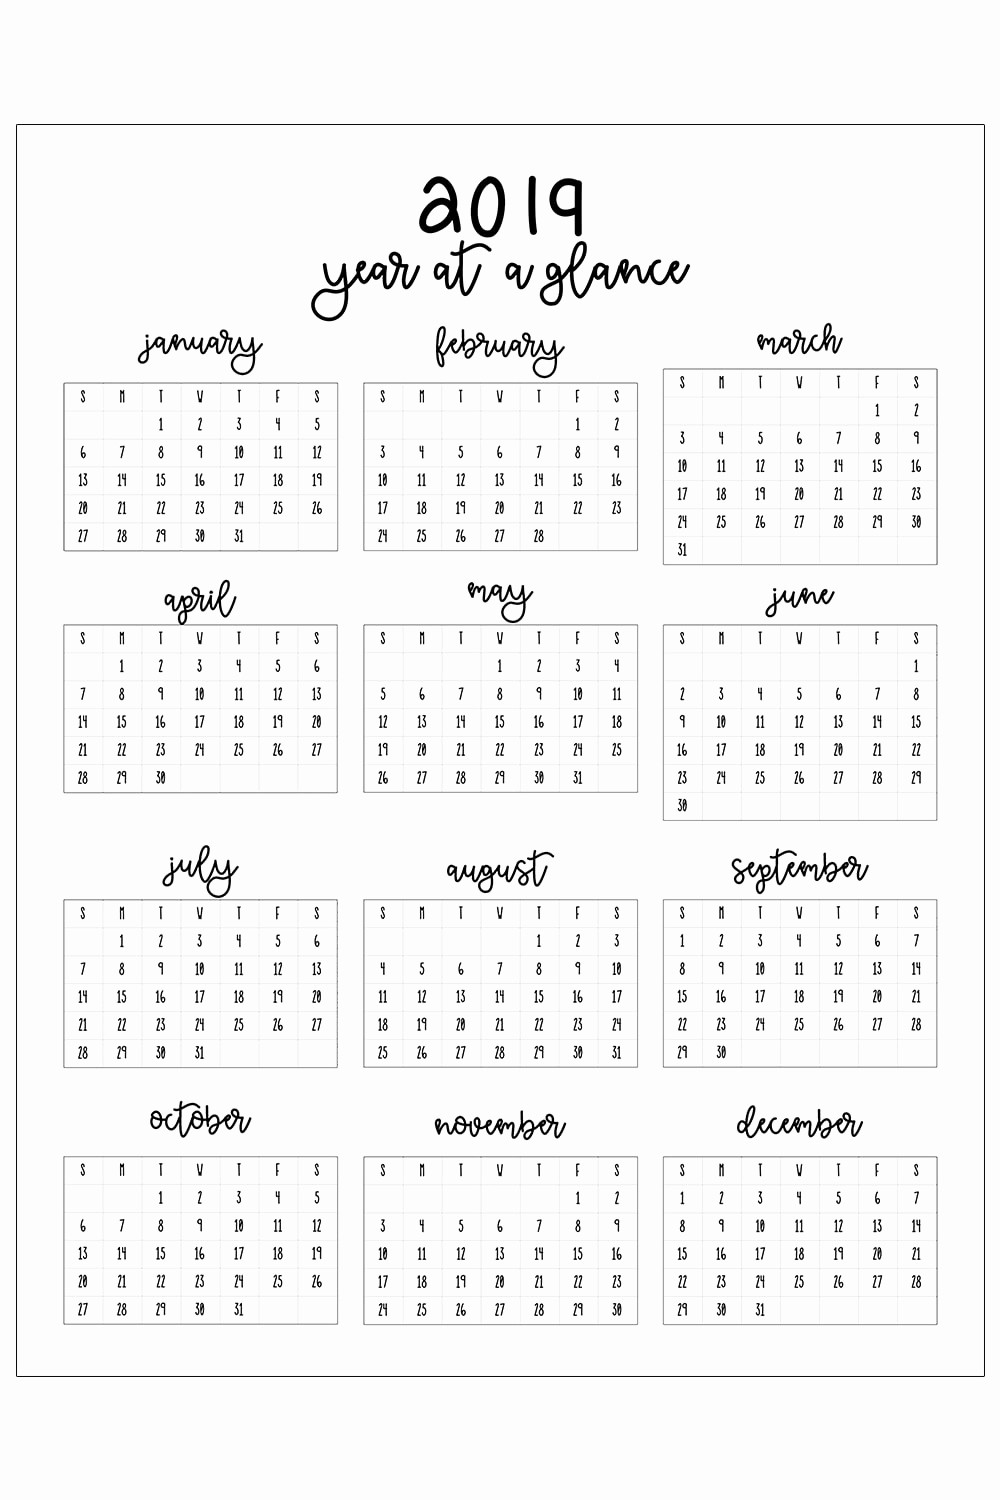 2019 Printable Calendar by Month Best Of 2019 Printable Calendar